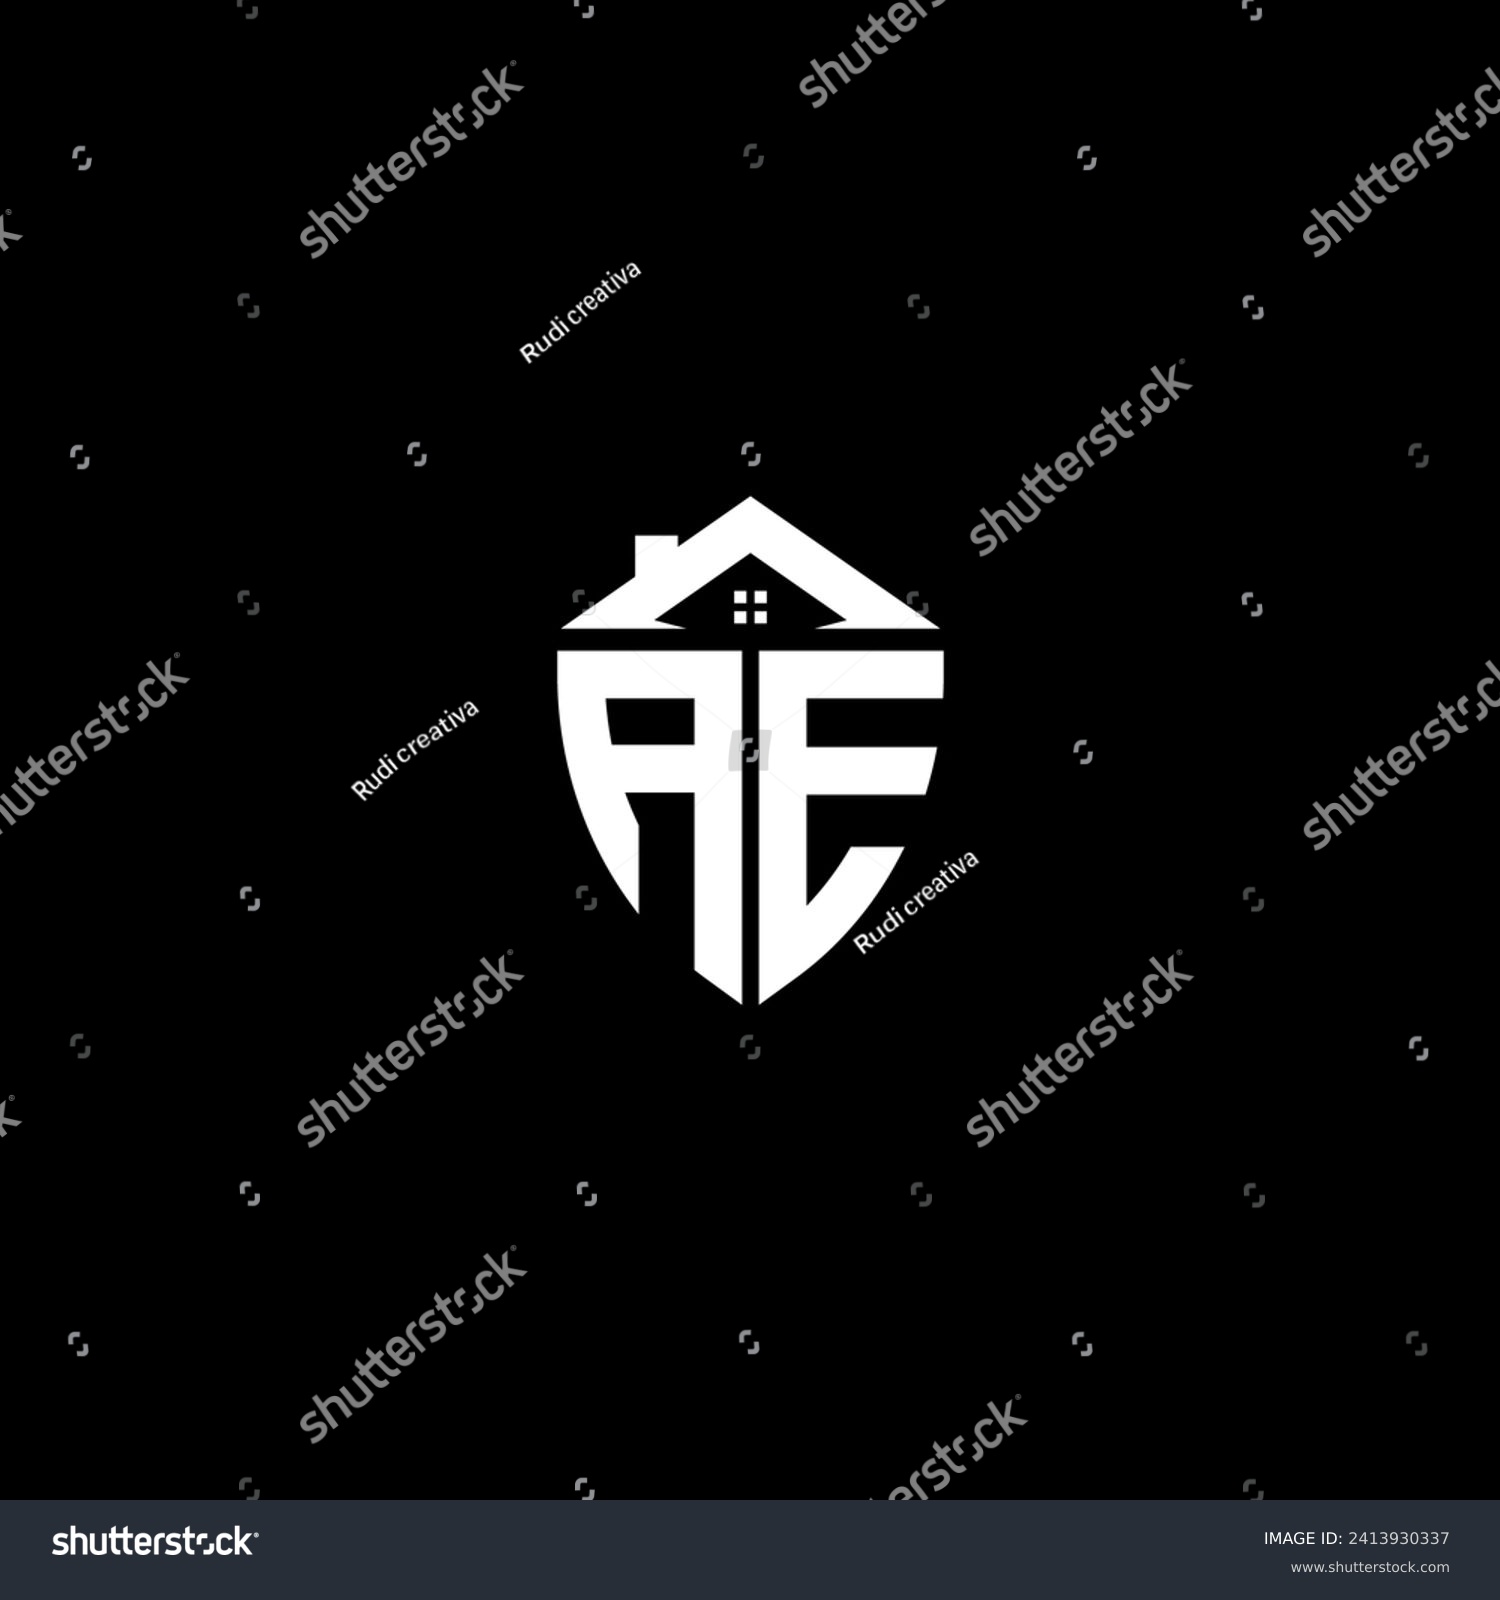 SVG of AE initials premium shield logo monogram with home designs modern templates svg